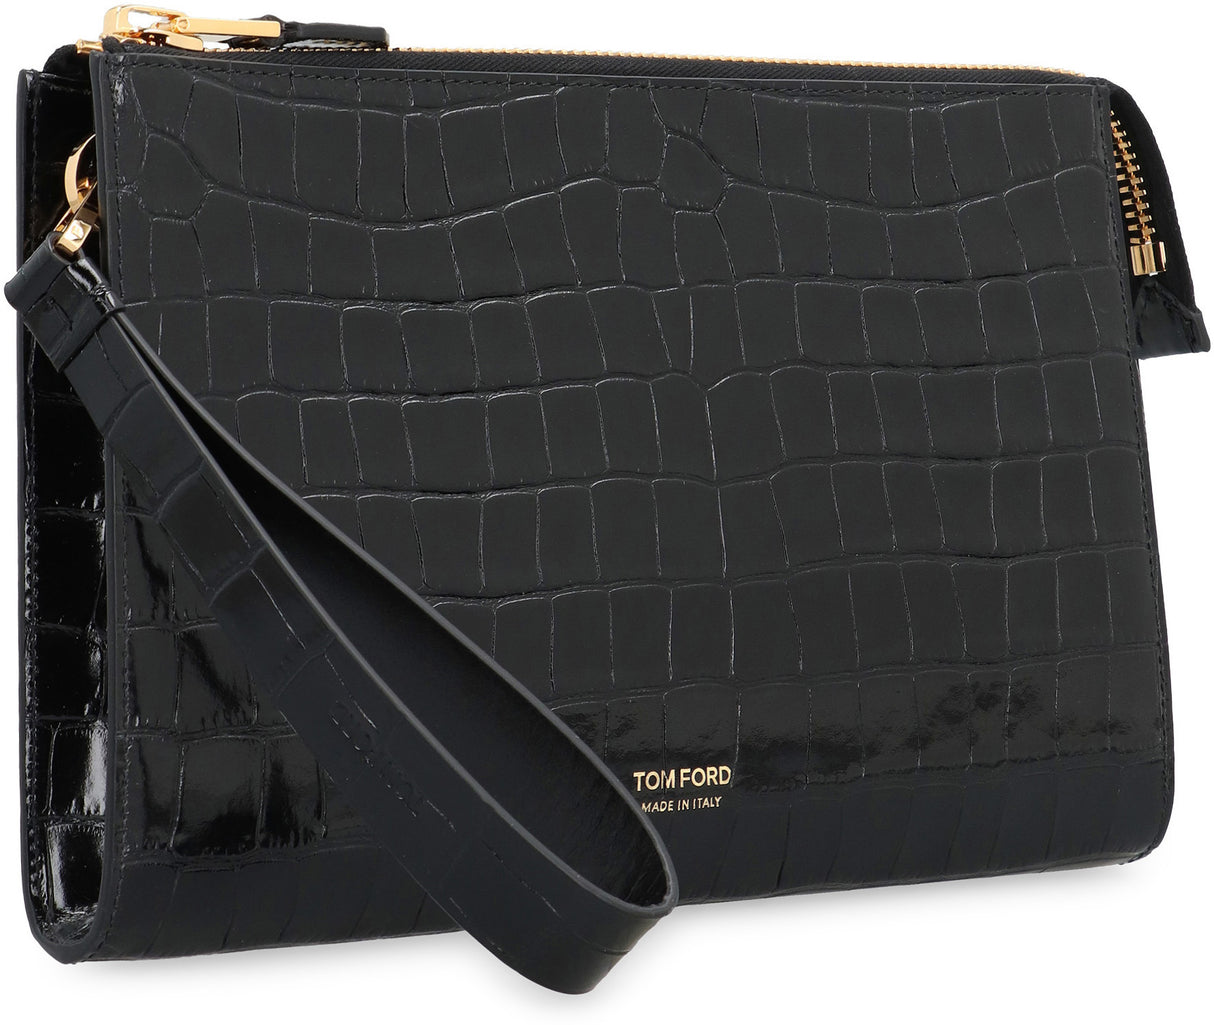 TOM FORD Men's Black Croco-Print Leather Pouch Handbag